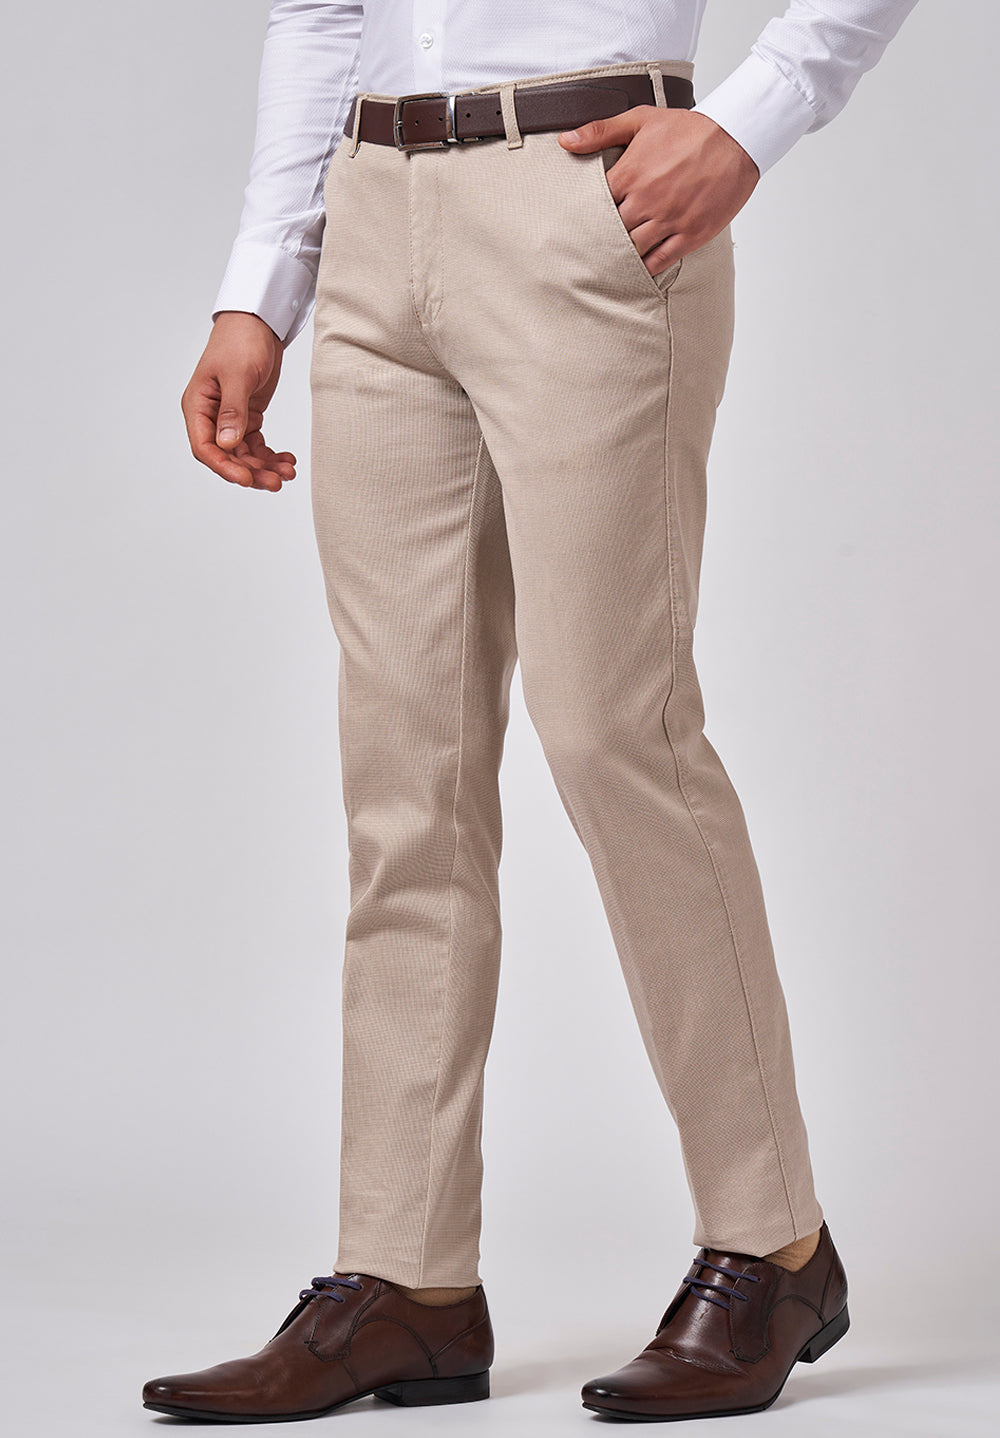 Narrow Fit Cotton Trouser - NR - 1